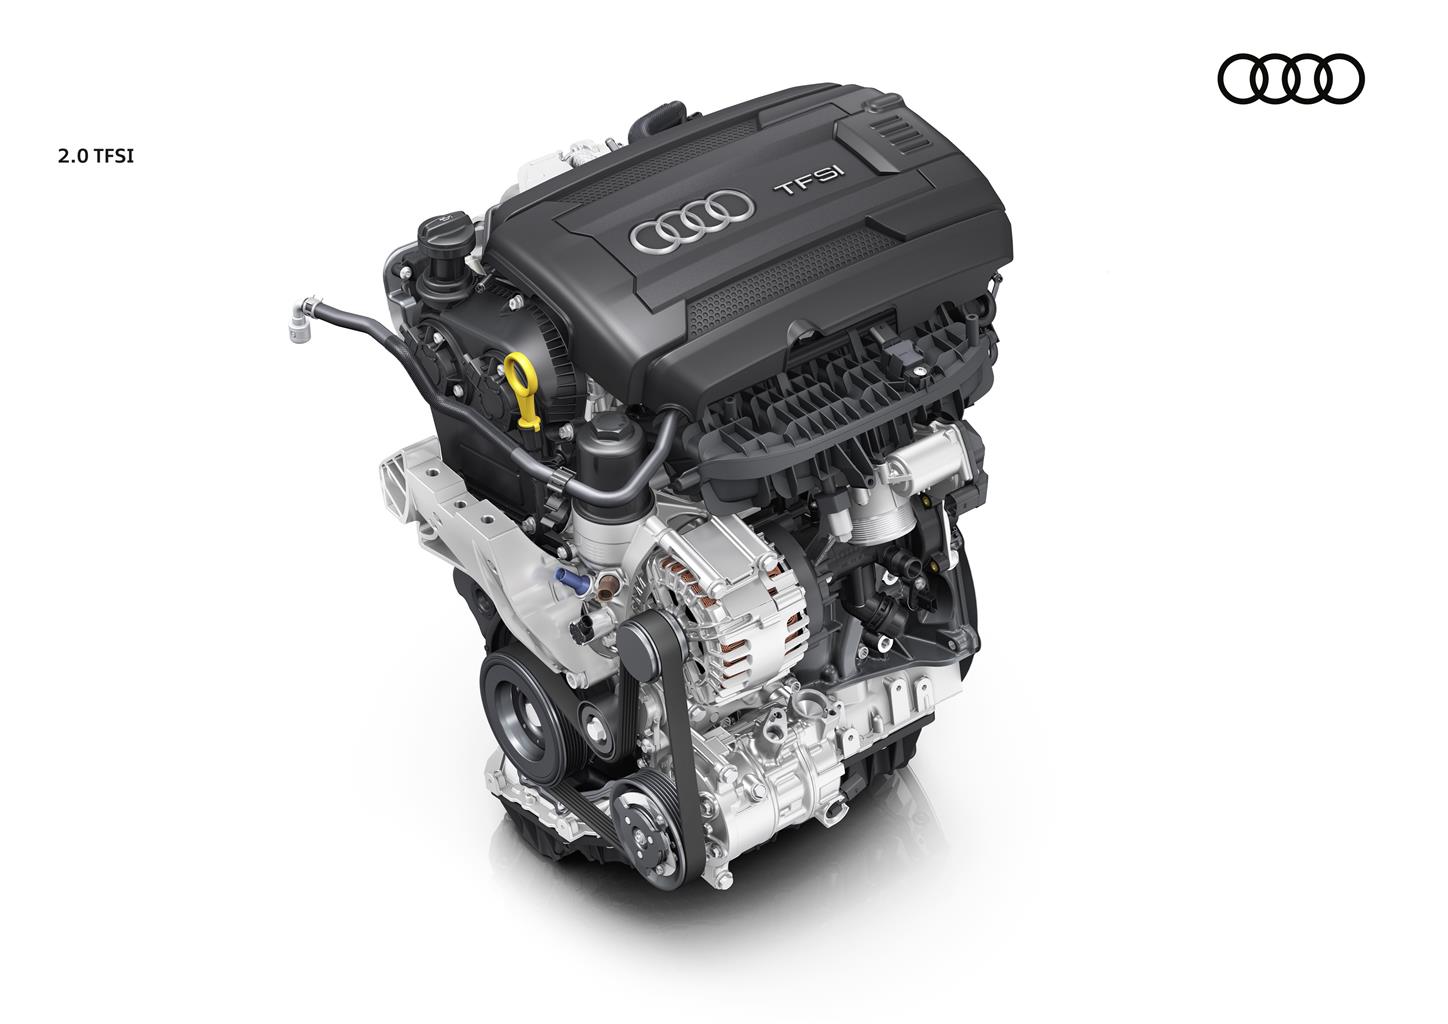 Il motore Audi 2.0 TFSI è “Engine of the Year” | Audicafe.it